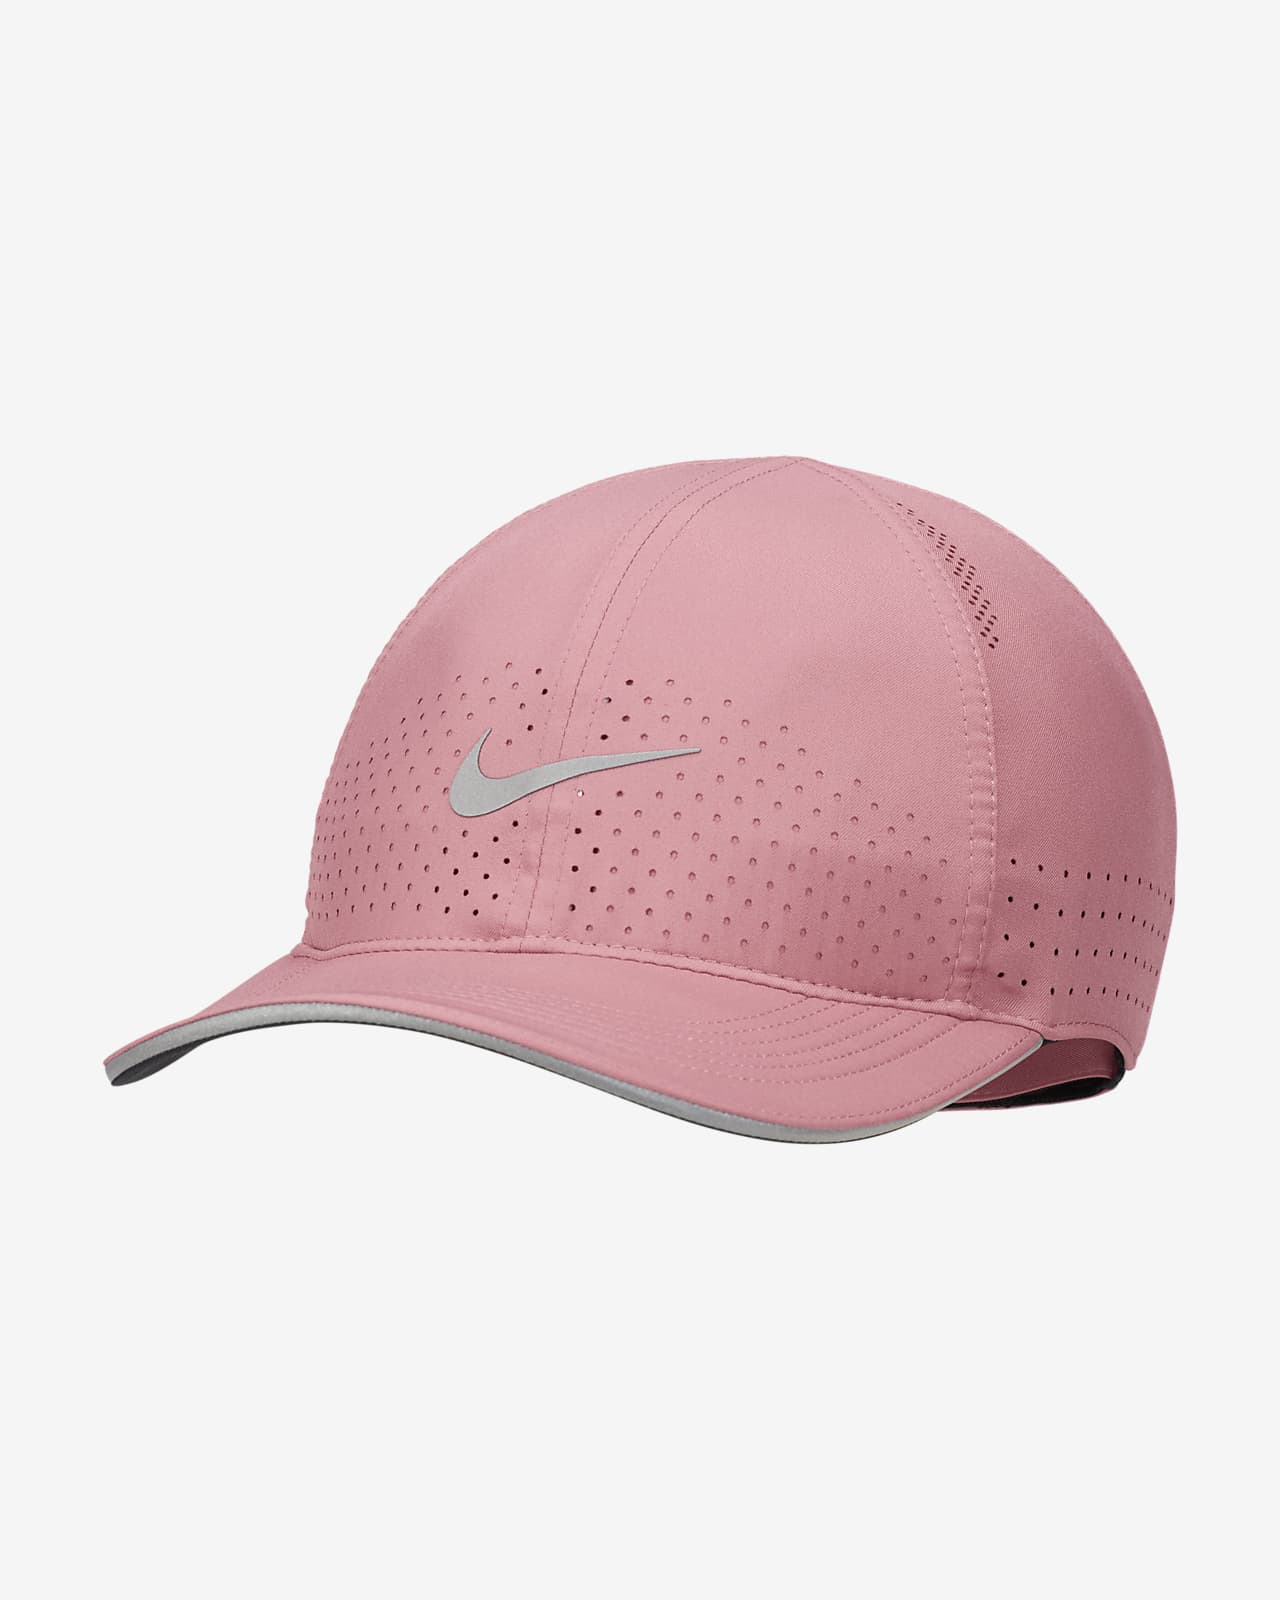 Nike Adult Unisex Dry AEROBILL Featherlight Running Hat, Opti